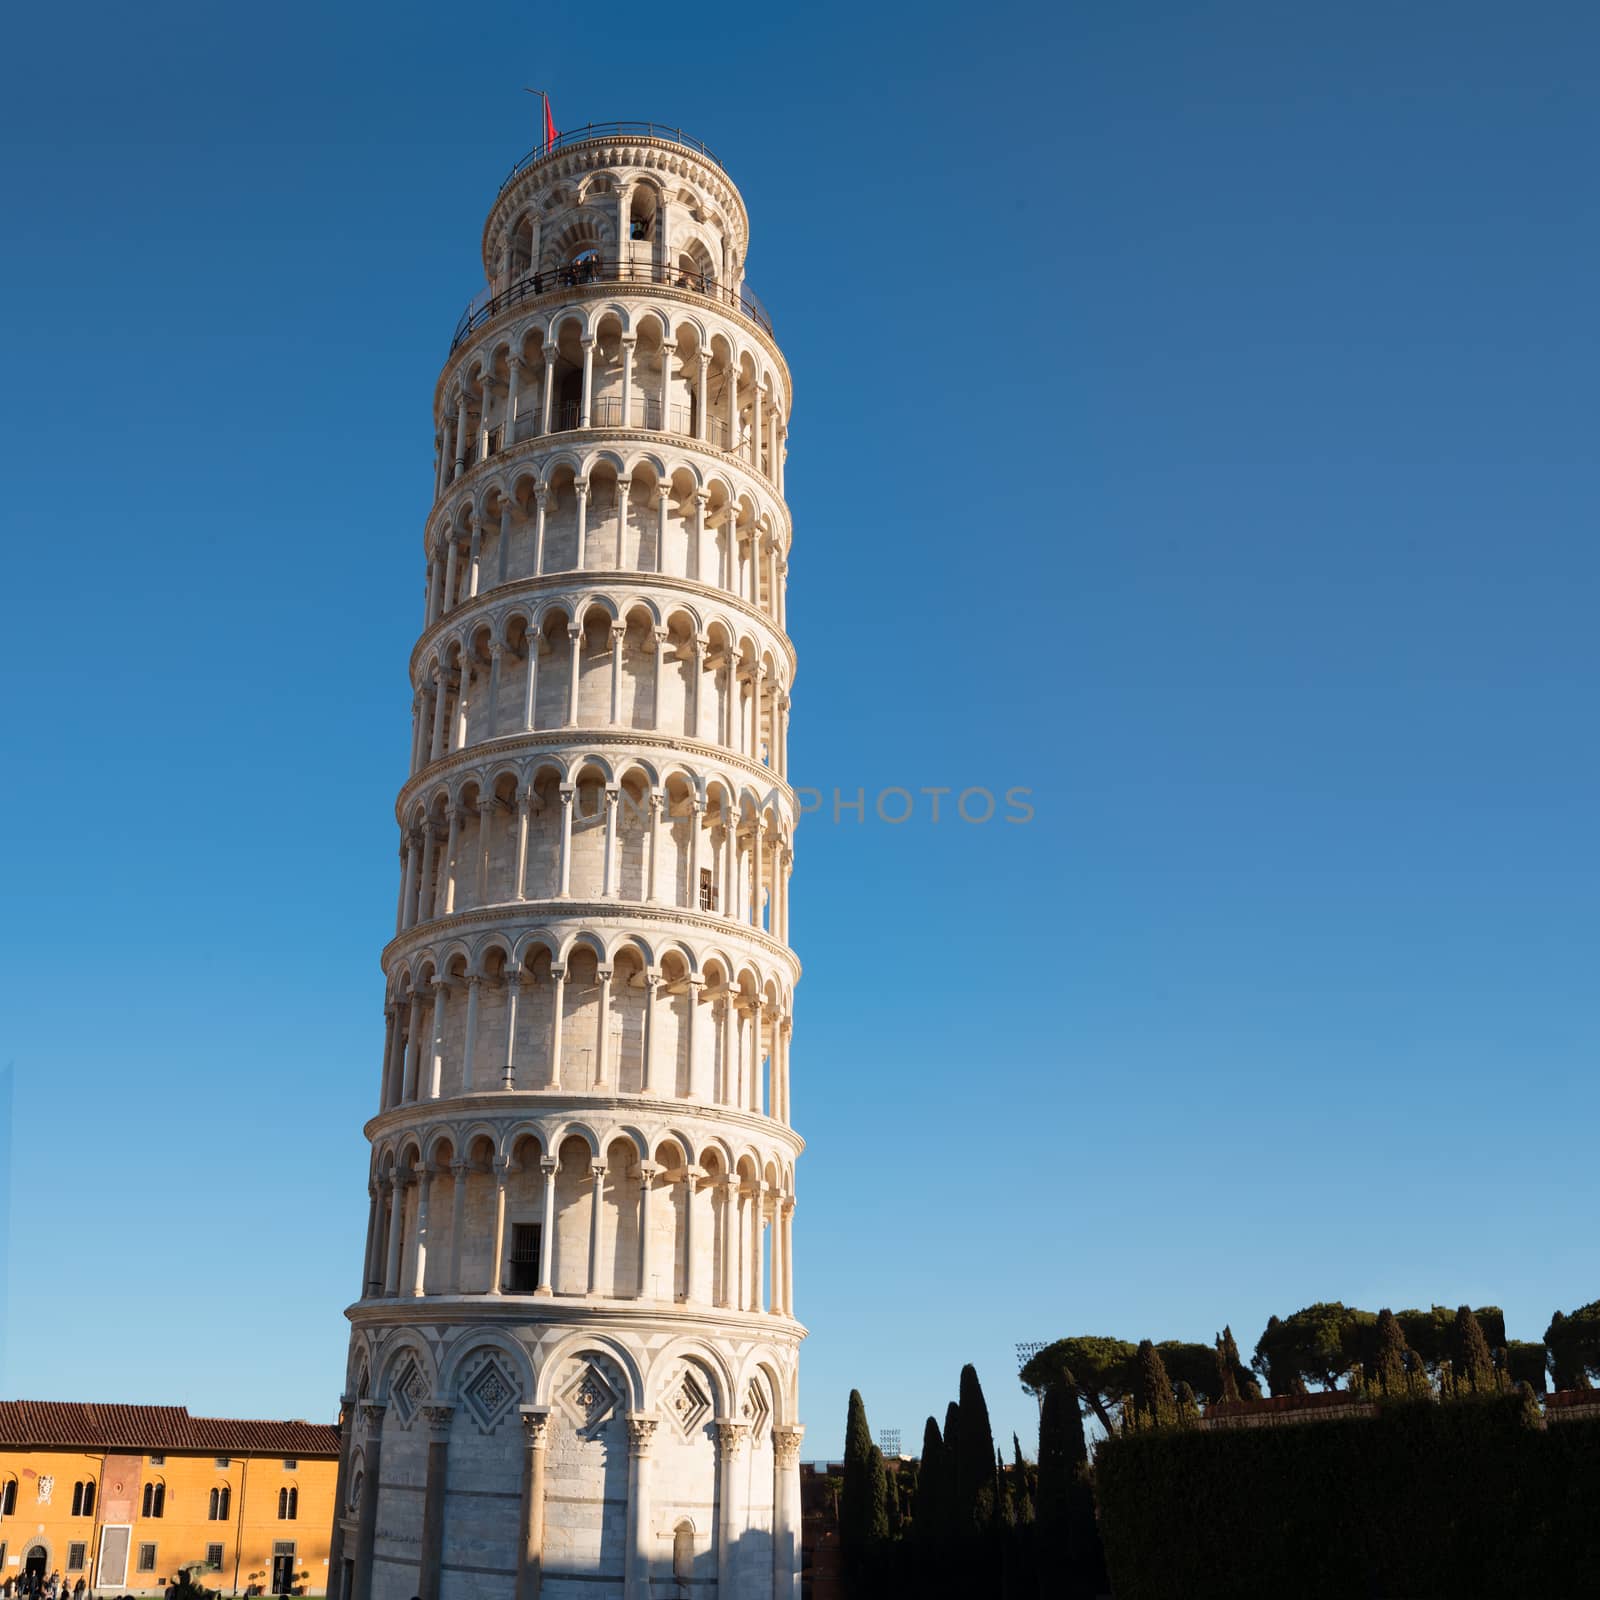 Leaning tower of Pisa by Robertobinetti70